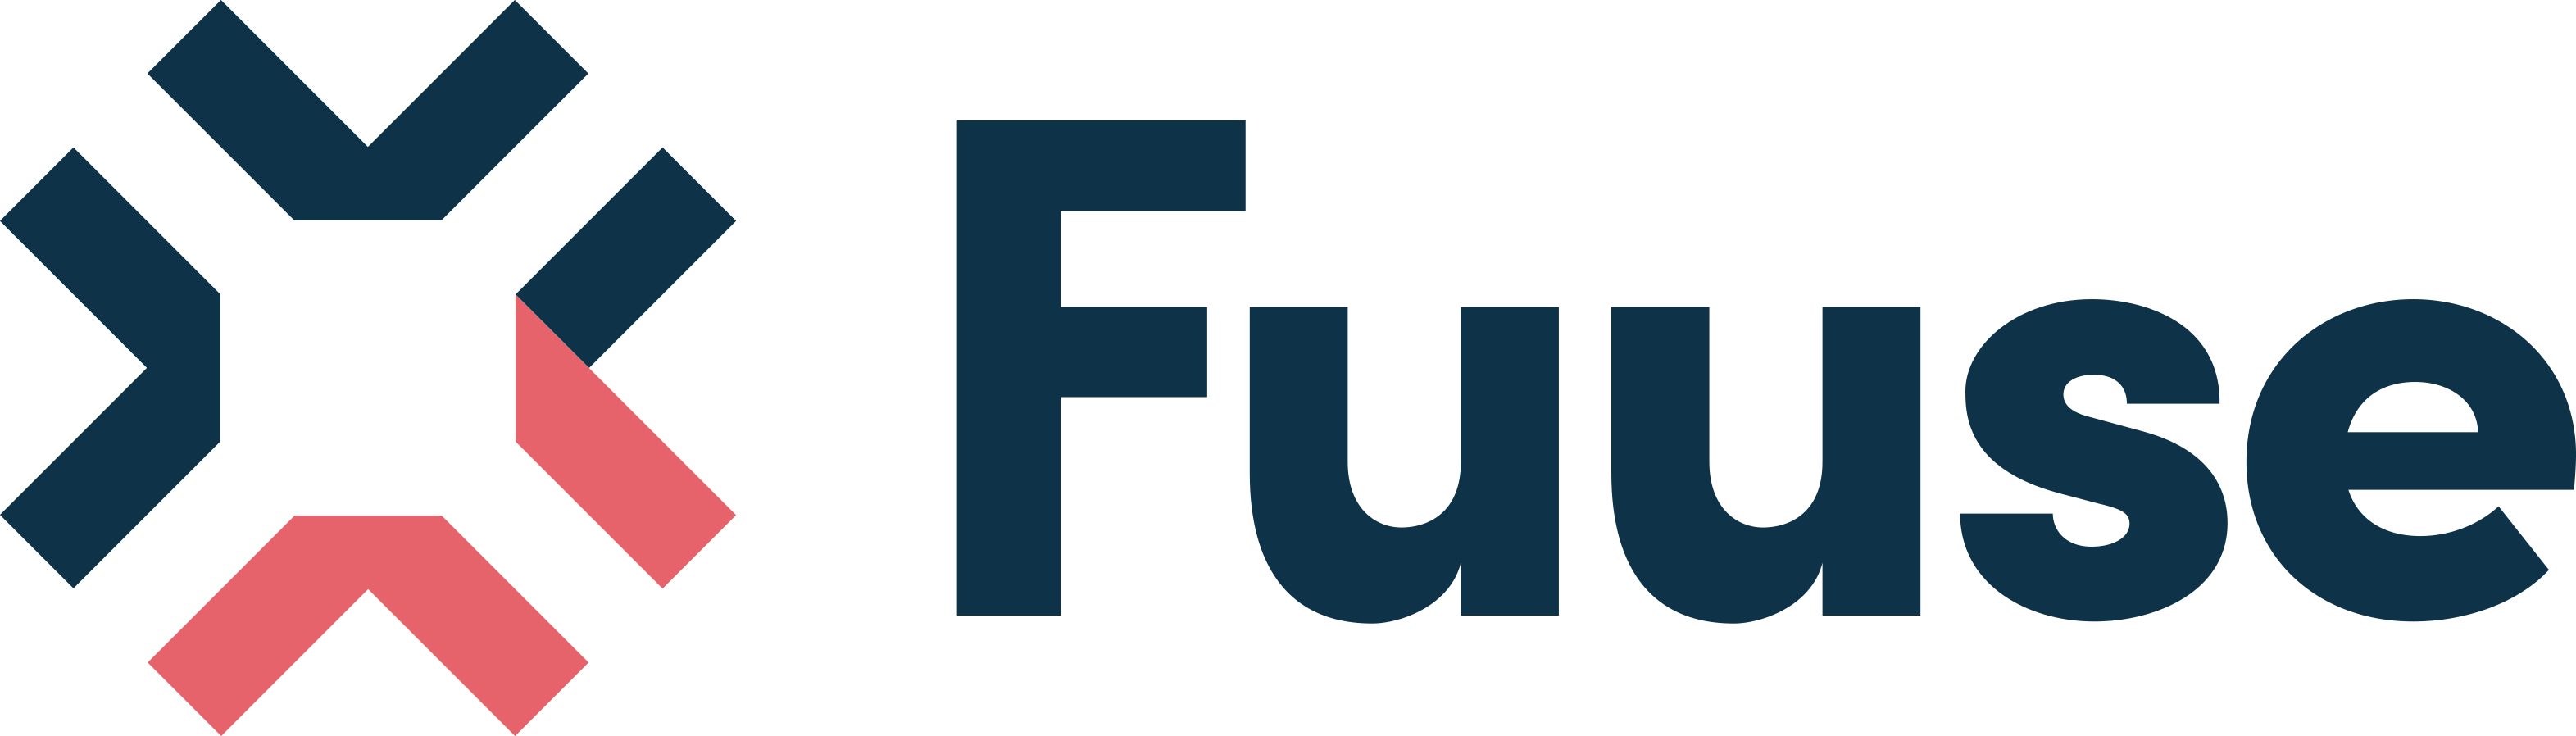 fuuse_logo